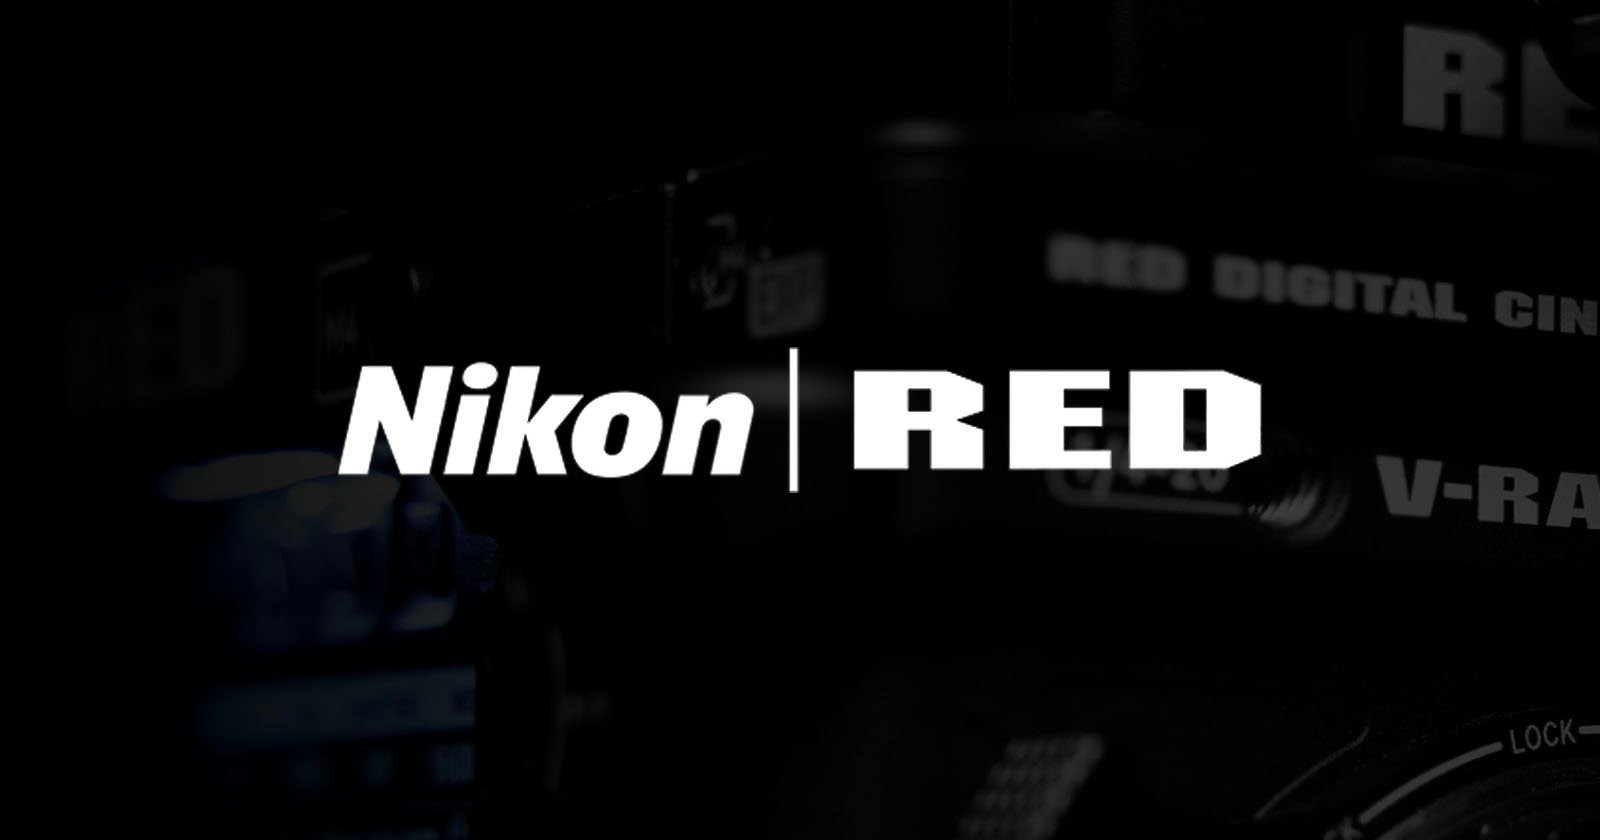 Nikon owns RED Cinema